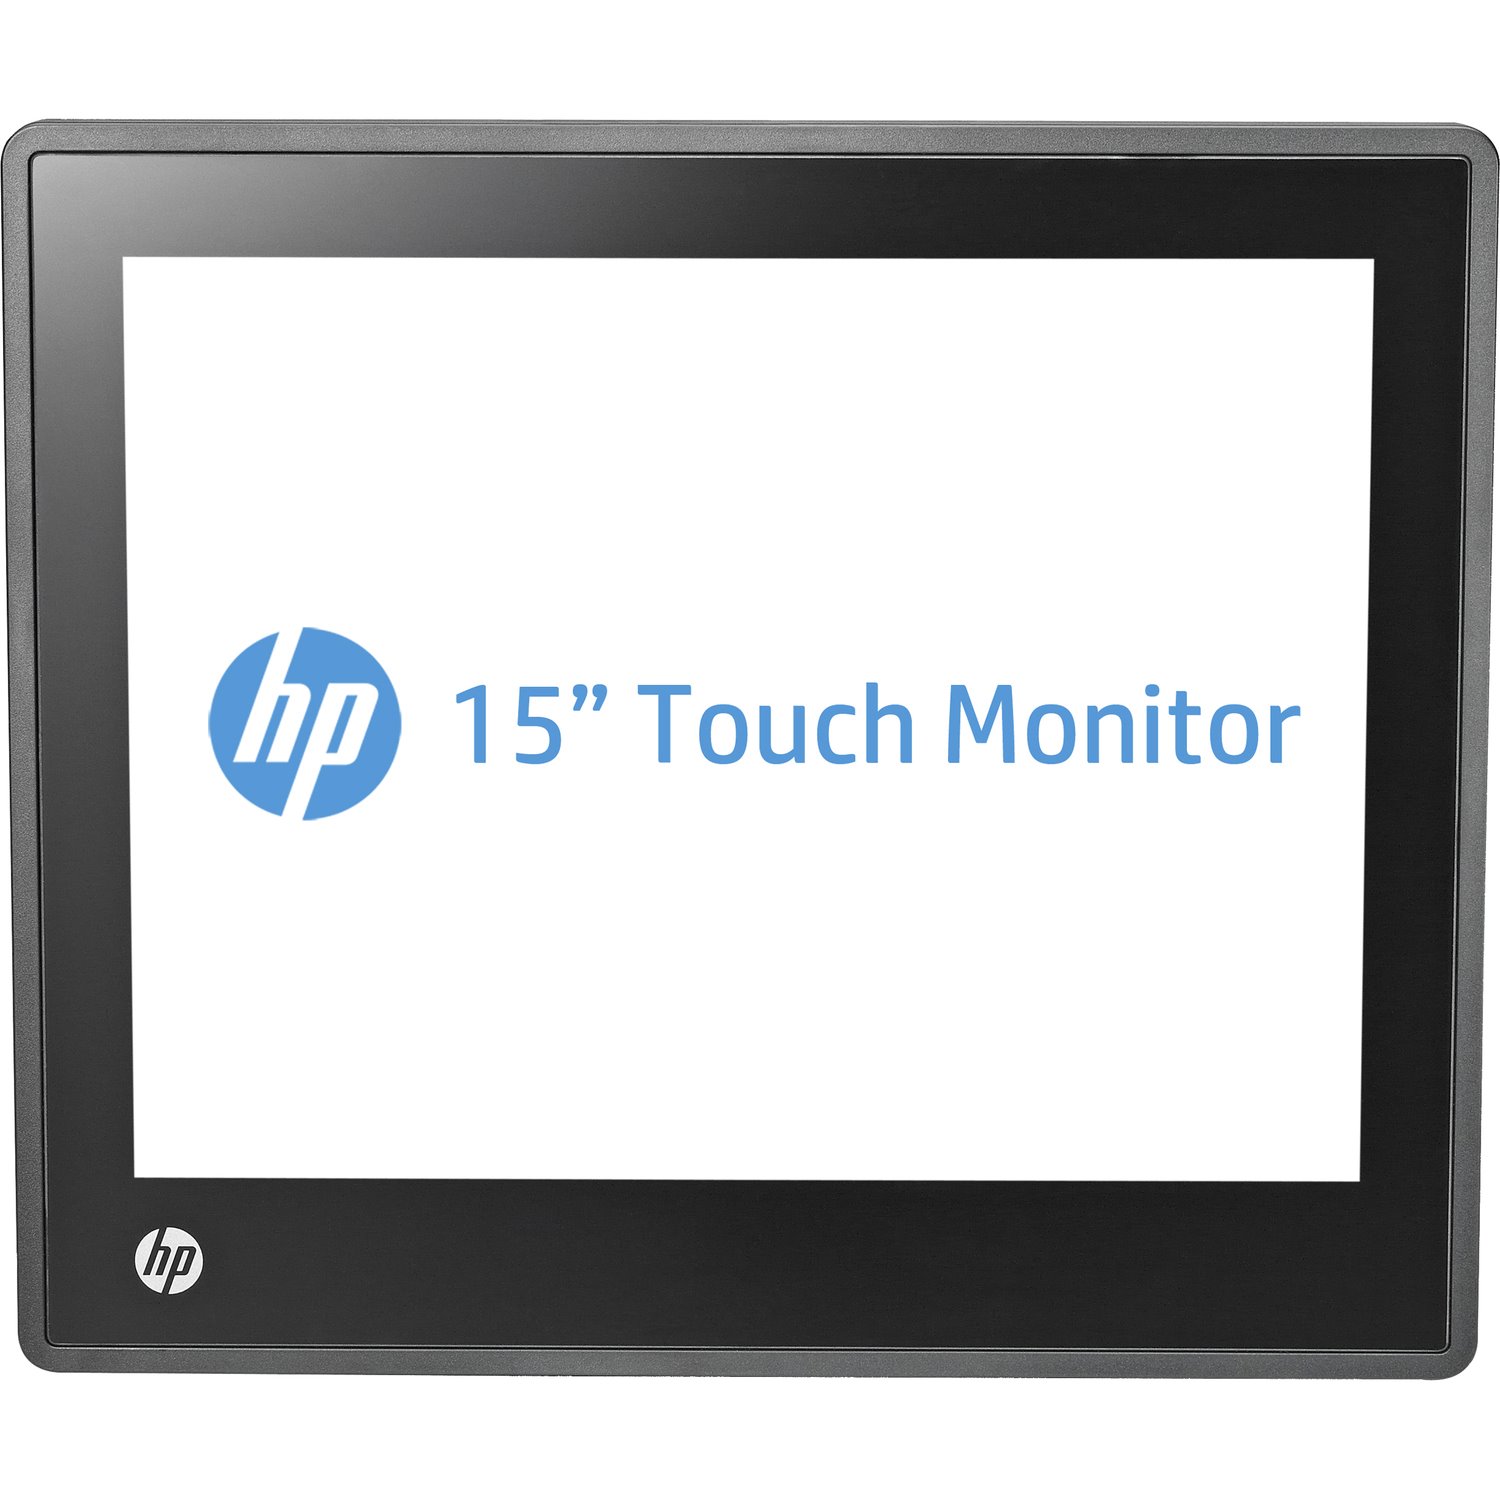 HP L6015tm 15" Class LCD Touchscreen Monitor - 4:3 - 25 ms